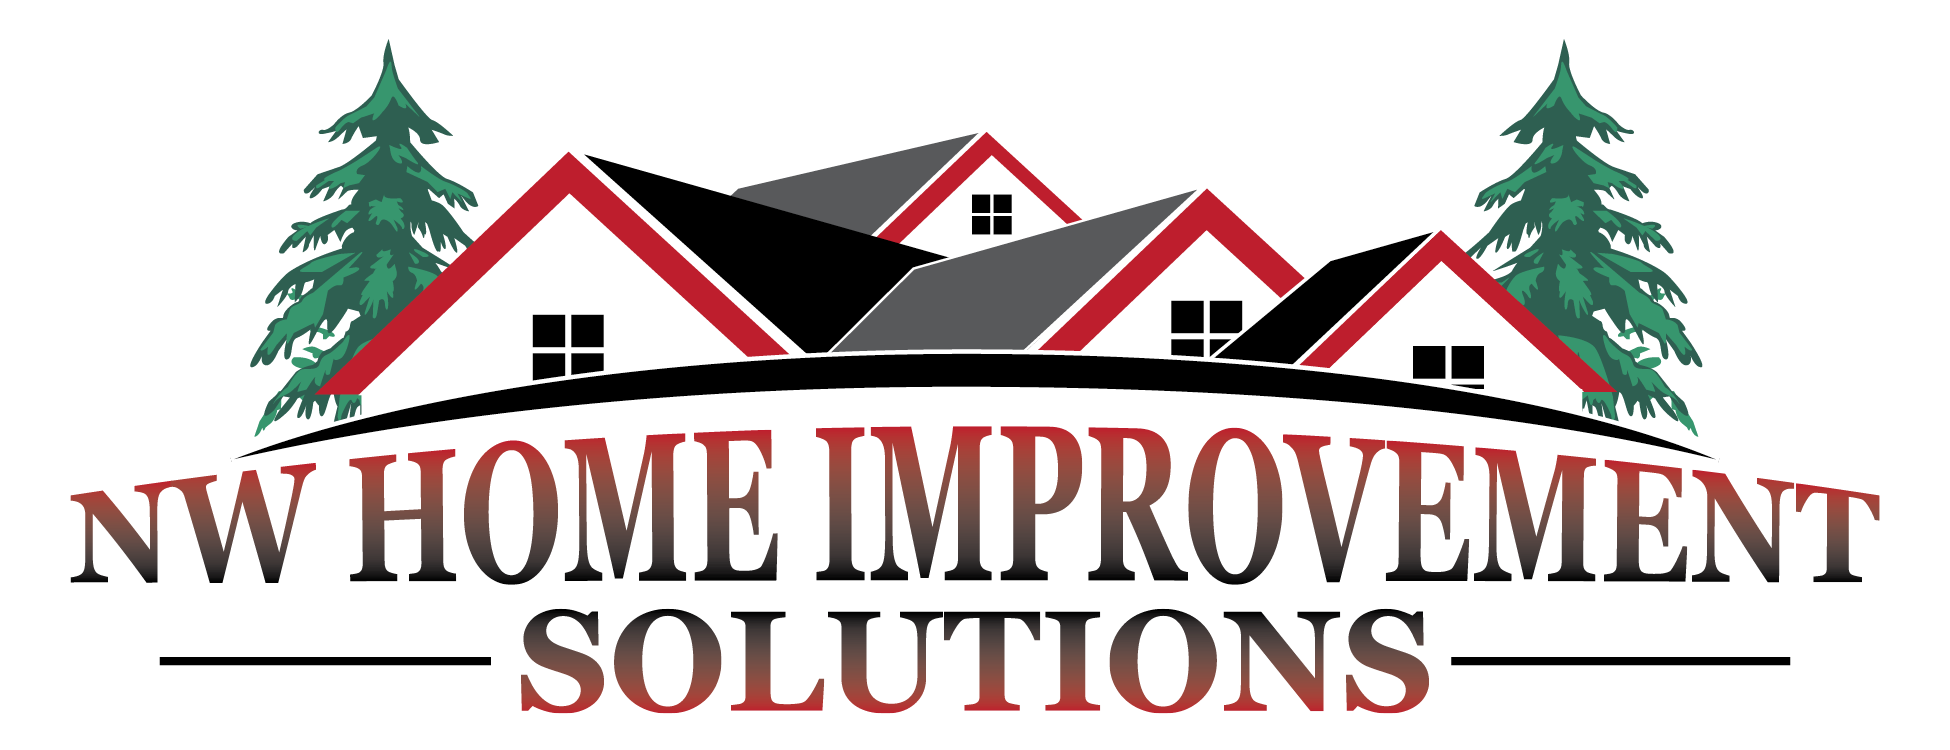 clipart home home improvement